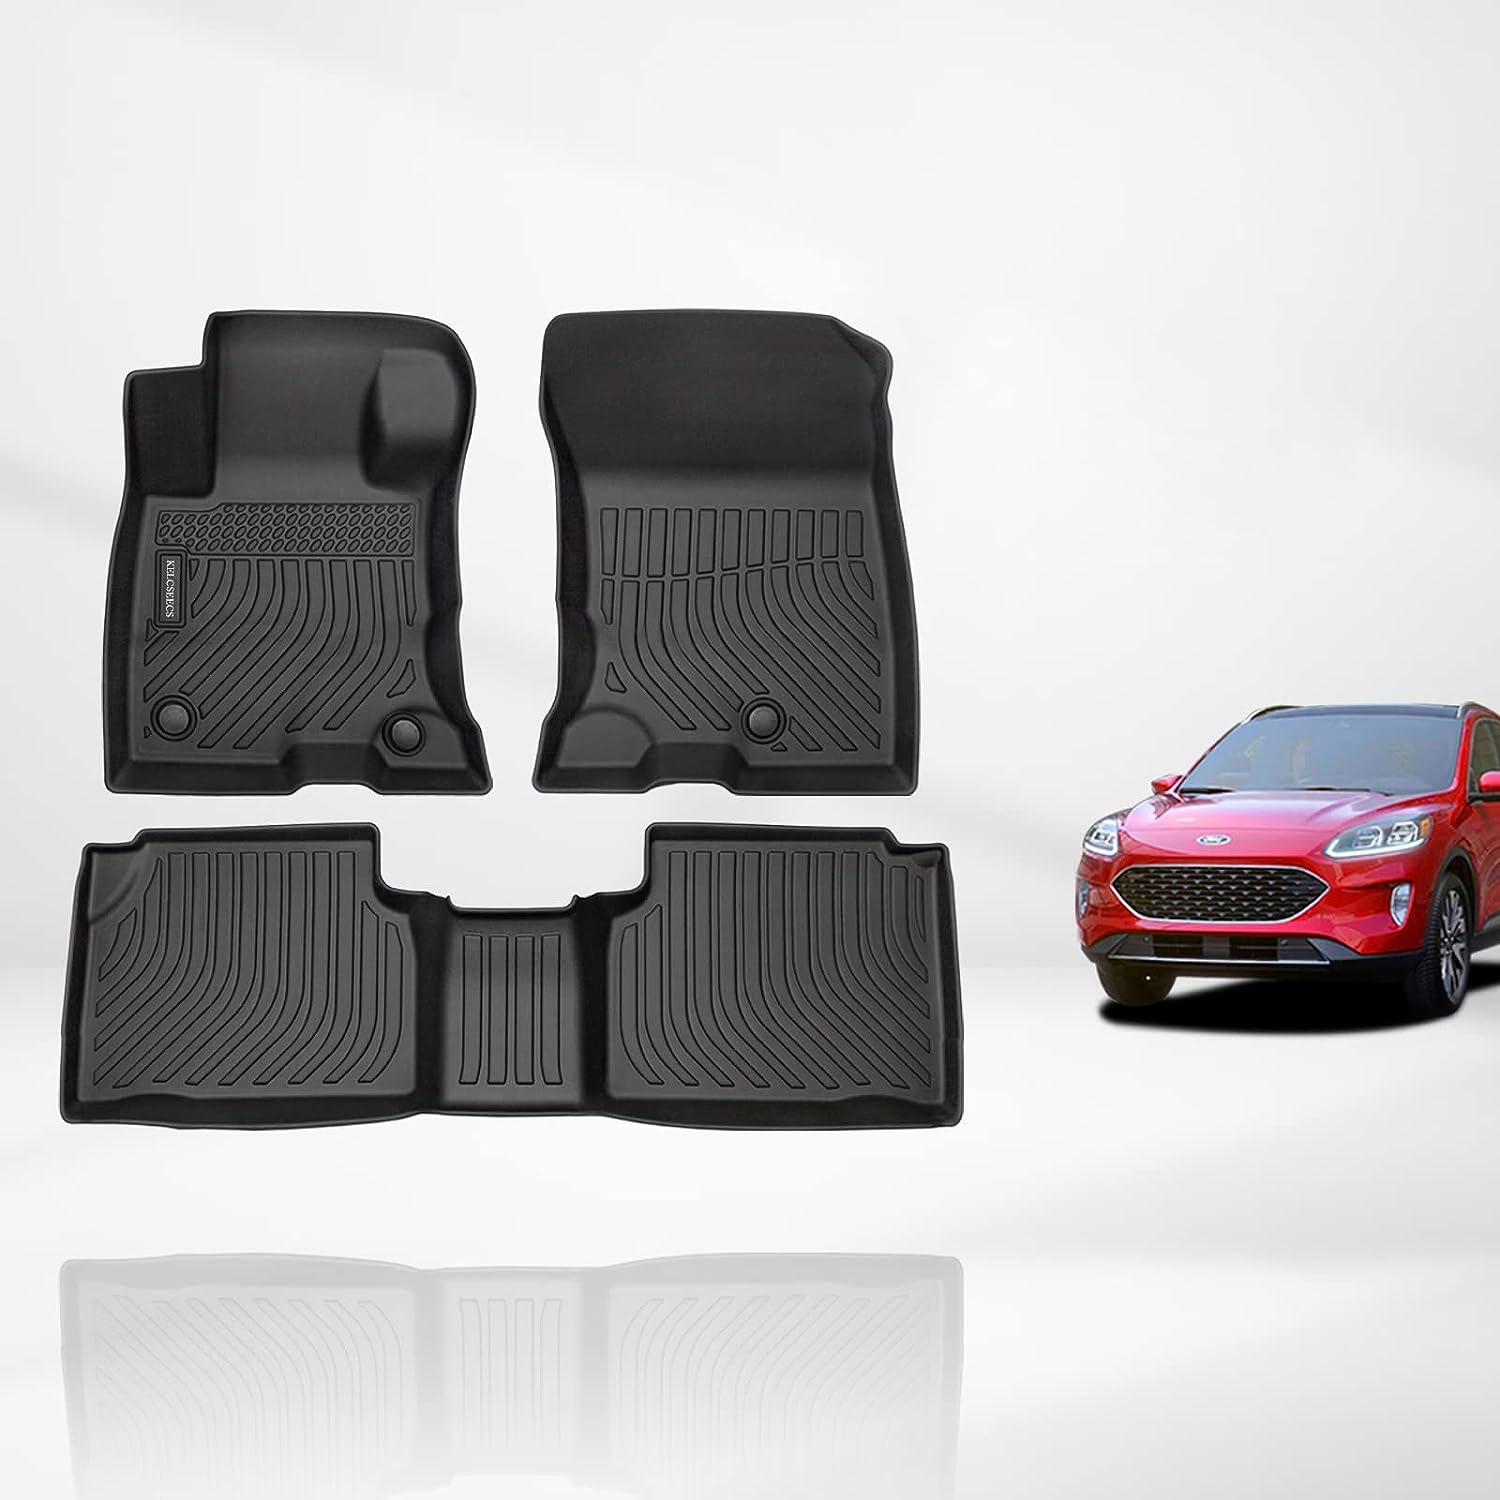 Kelcseecs All Weather 3D Tech Design TPE Car Floor Mats Floor Liners For Ford Escape Hybrid 2020-2023